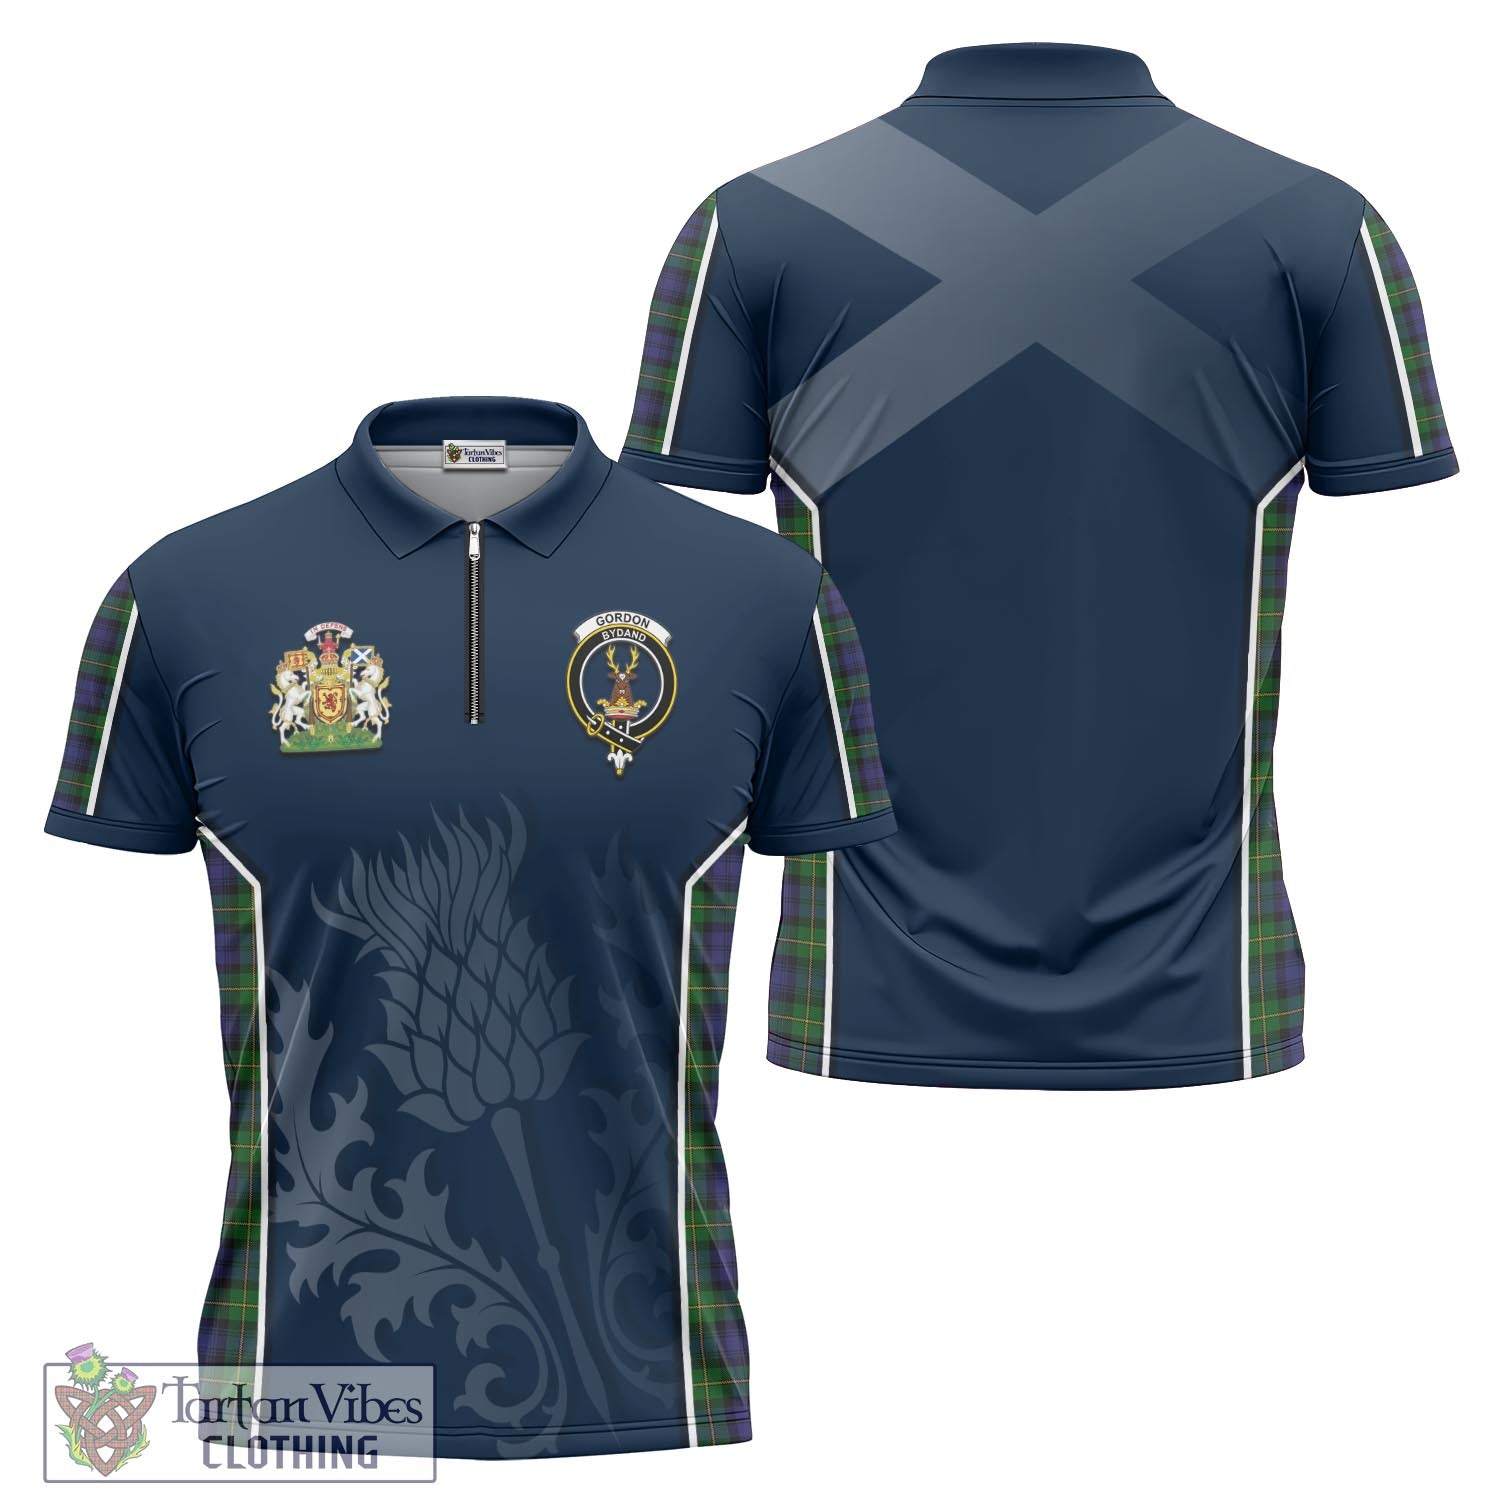 Tartan Vibes Clothing Gordon Tartan Zipper Polo Shirt with Family Crest and Scottish Thistle Vibes Sport Style